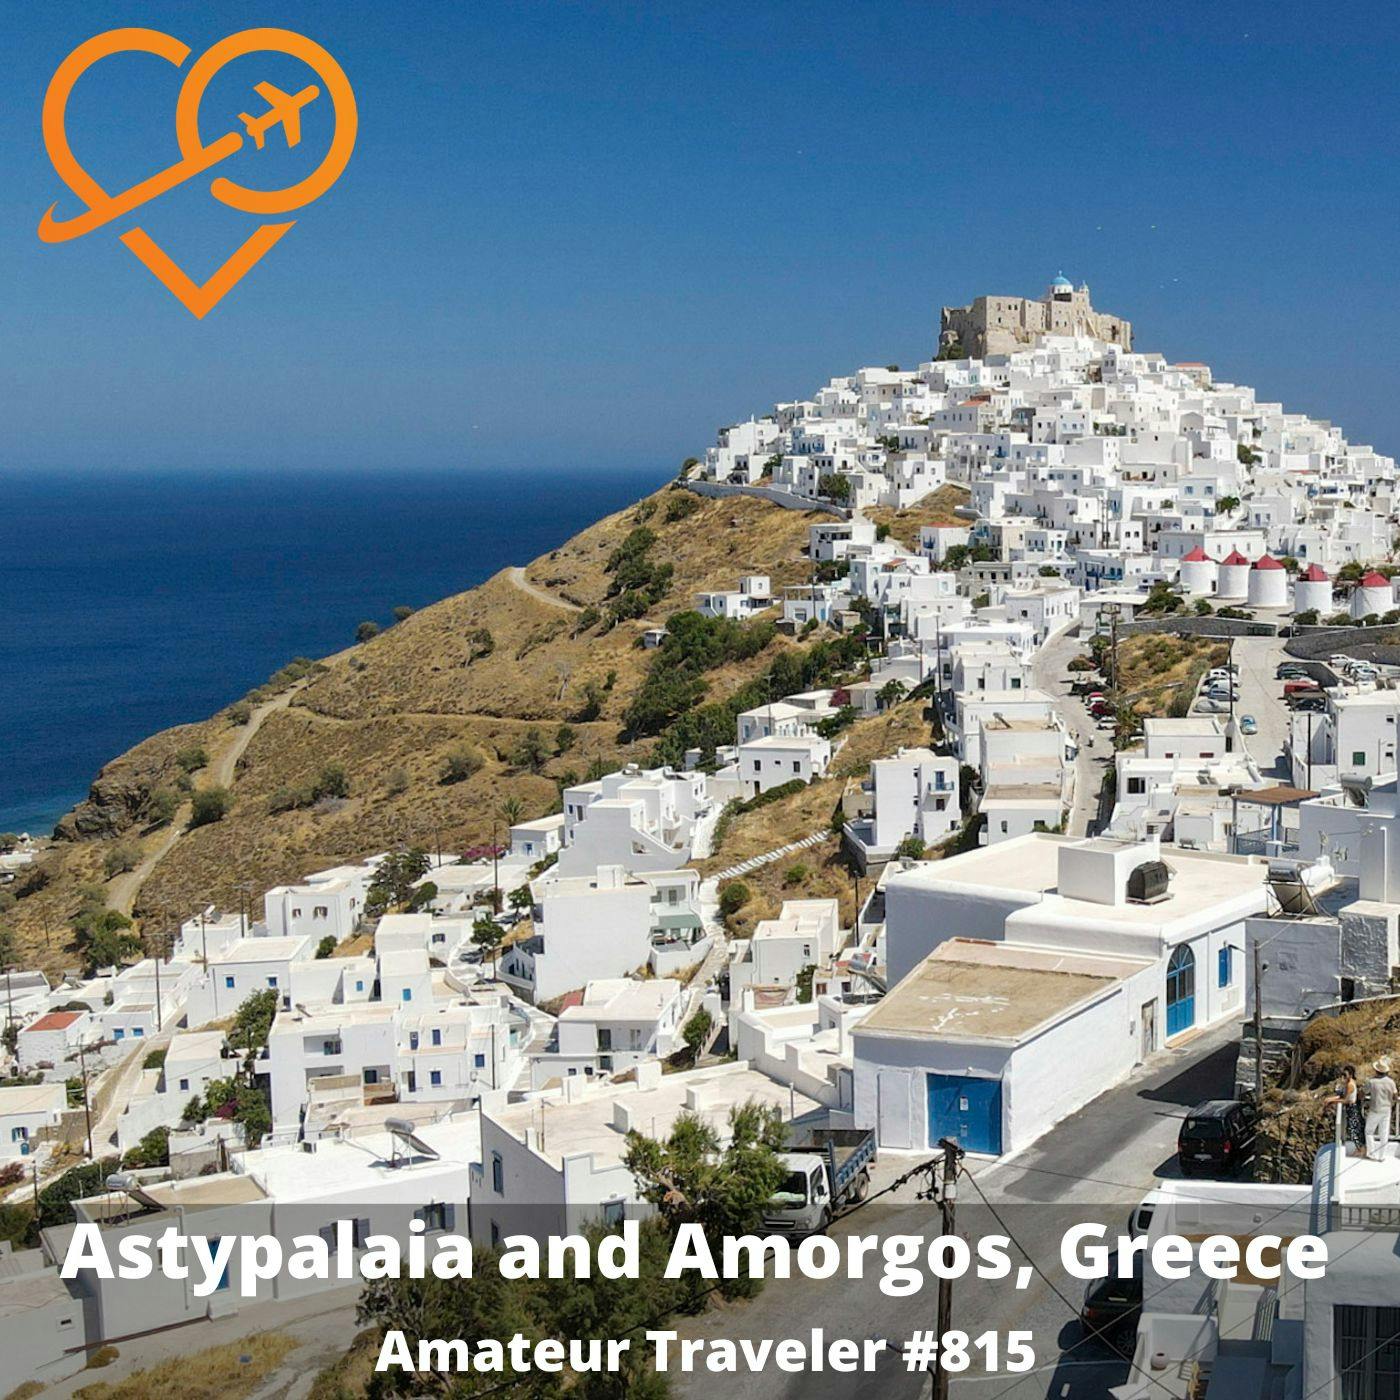 AT#815 - Travel to Astypalaia and Amorgos, Greece